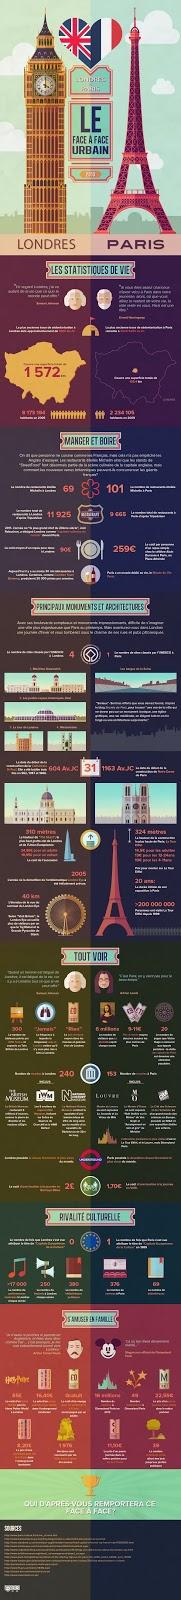 Infographie : Paris versus Londres